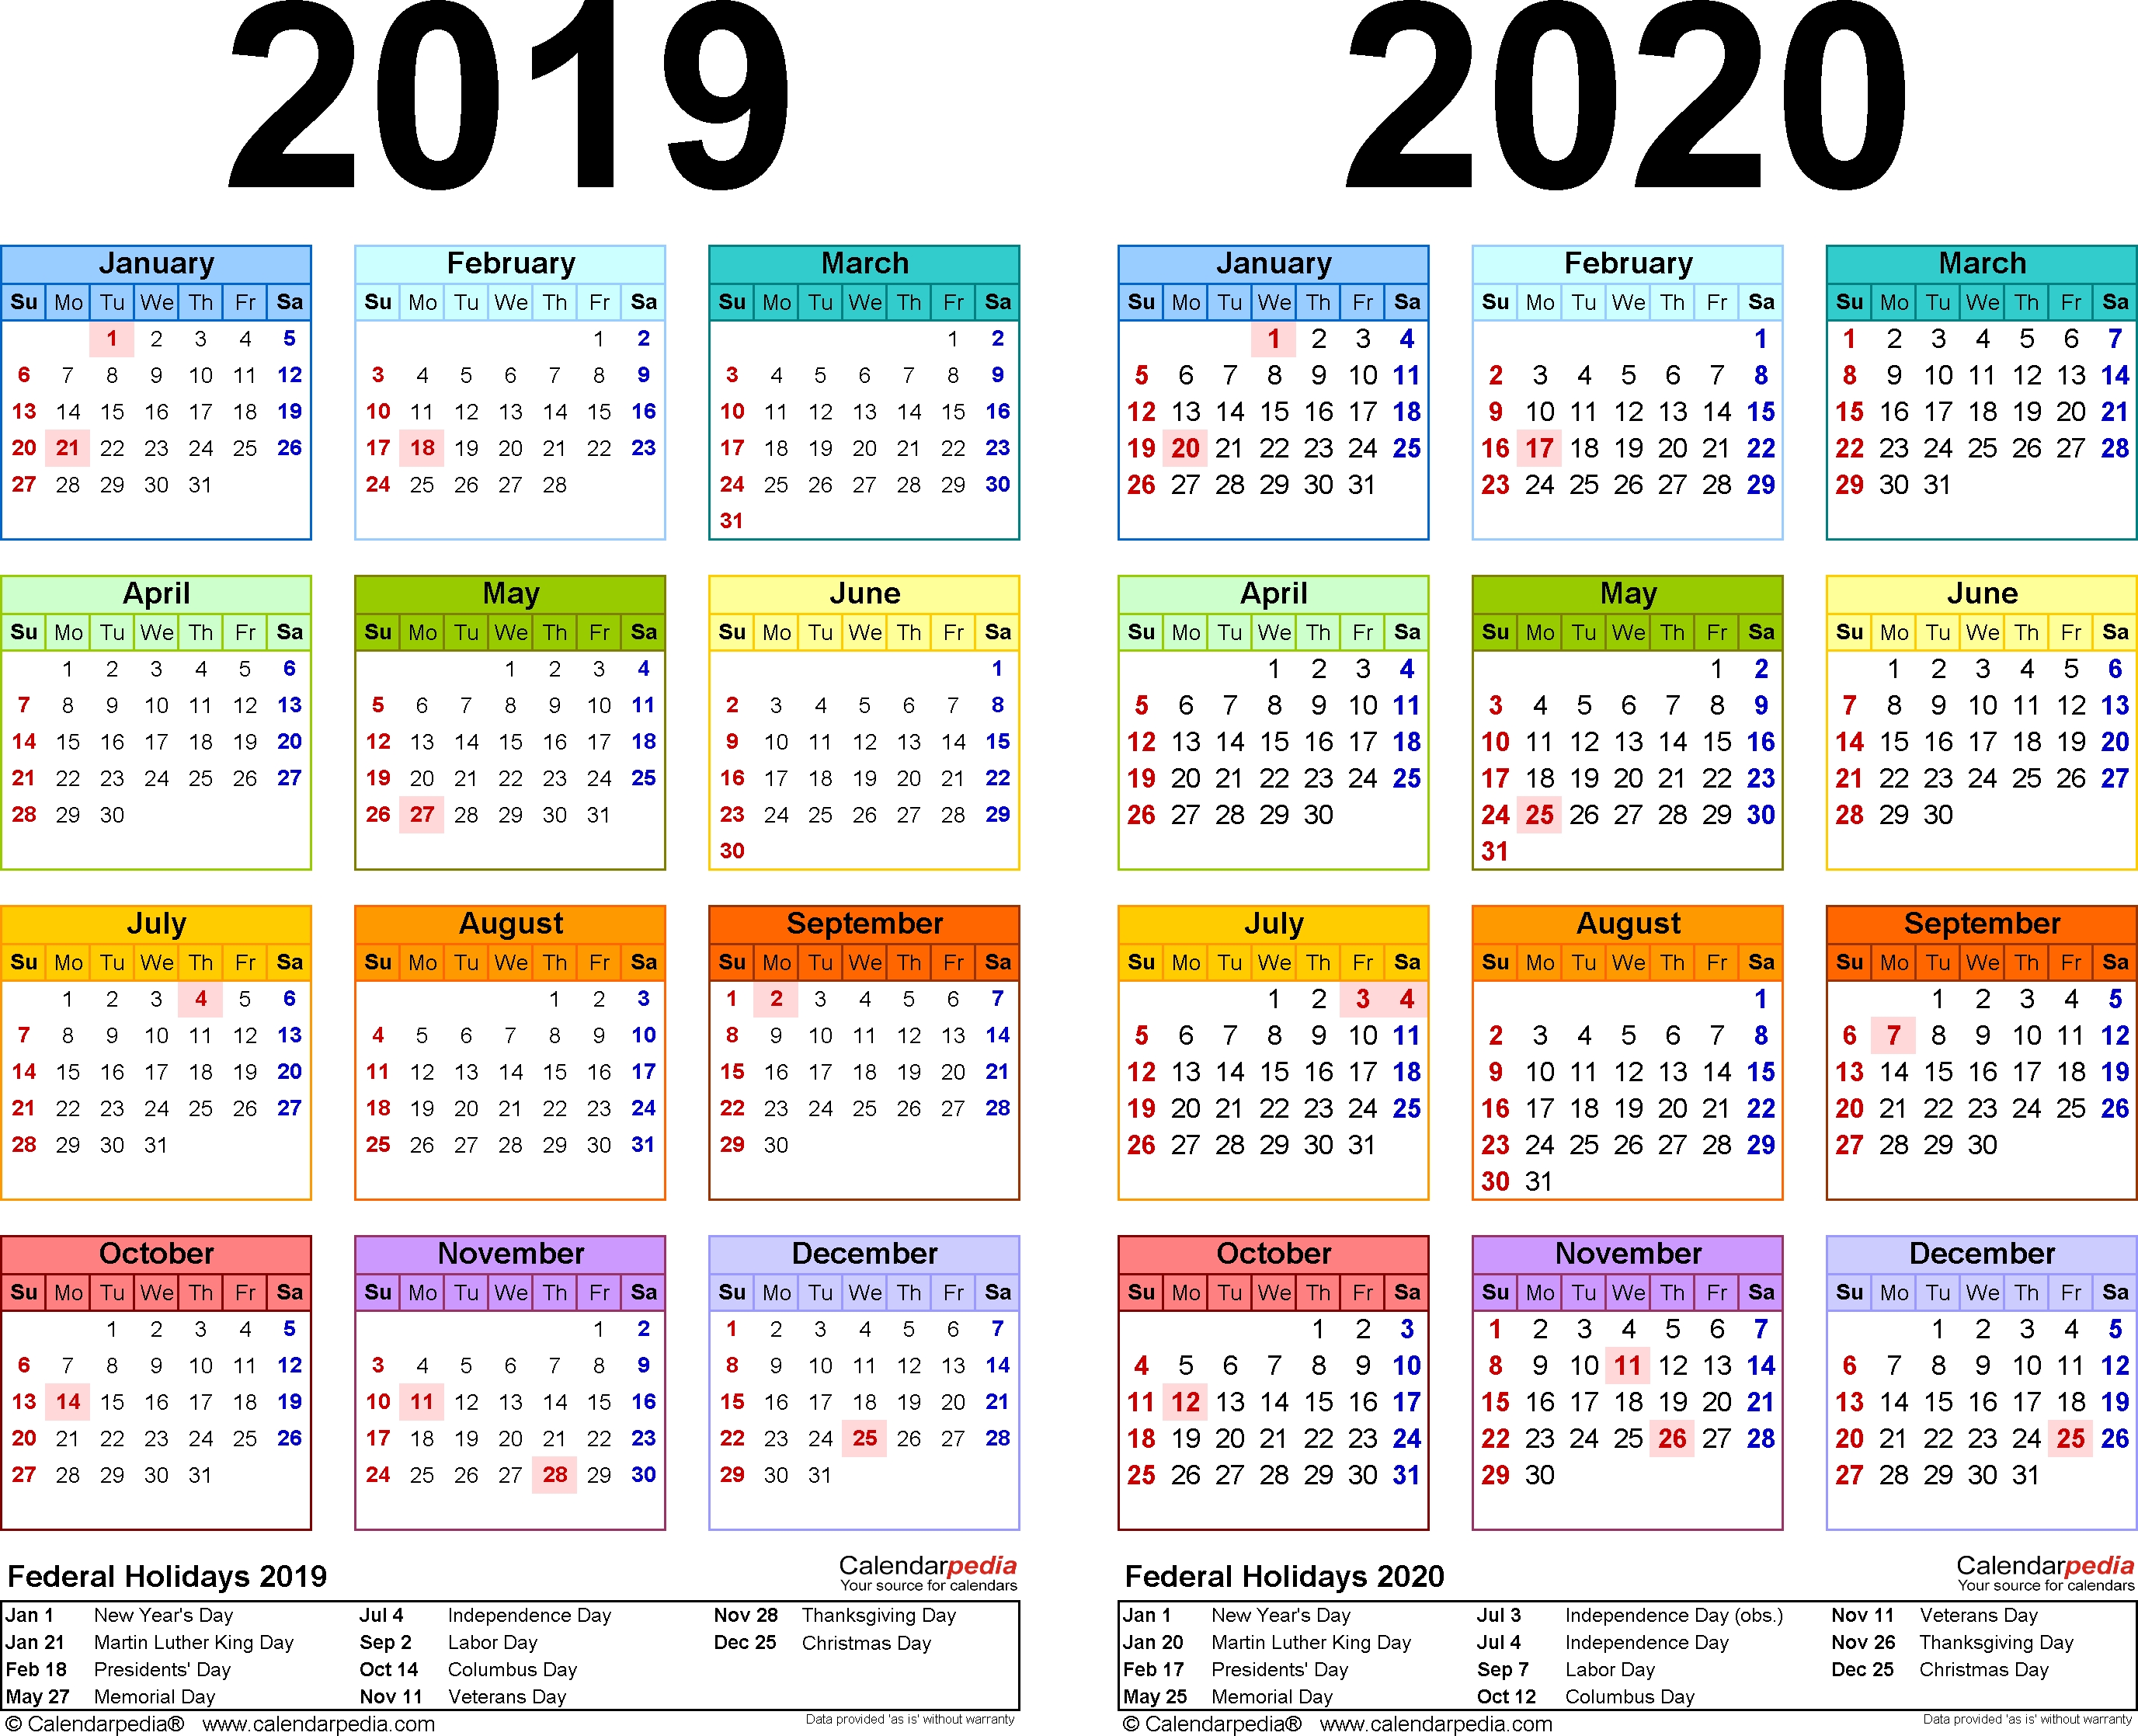 2019-2020 Calendar - Free Printable Two-Year Pdf Calendars within 2019-2020 Free Blank Calendars